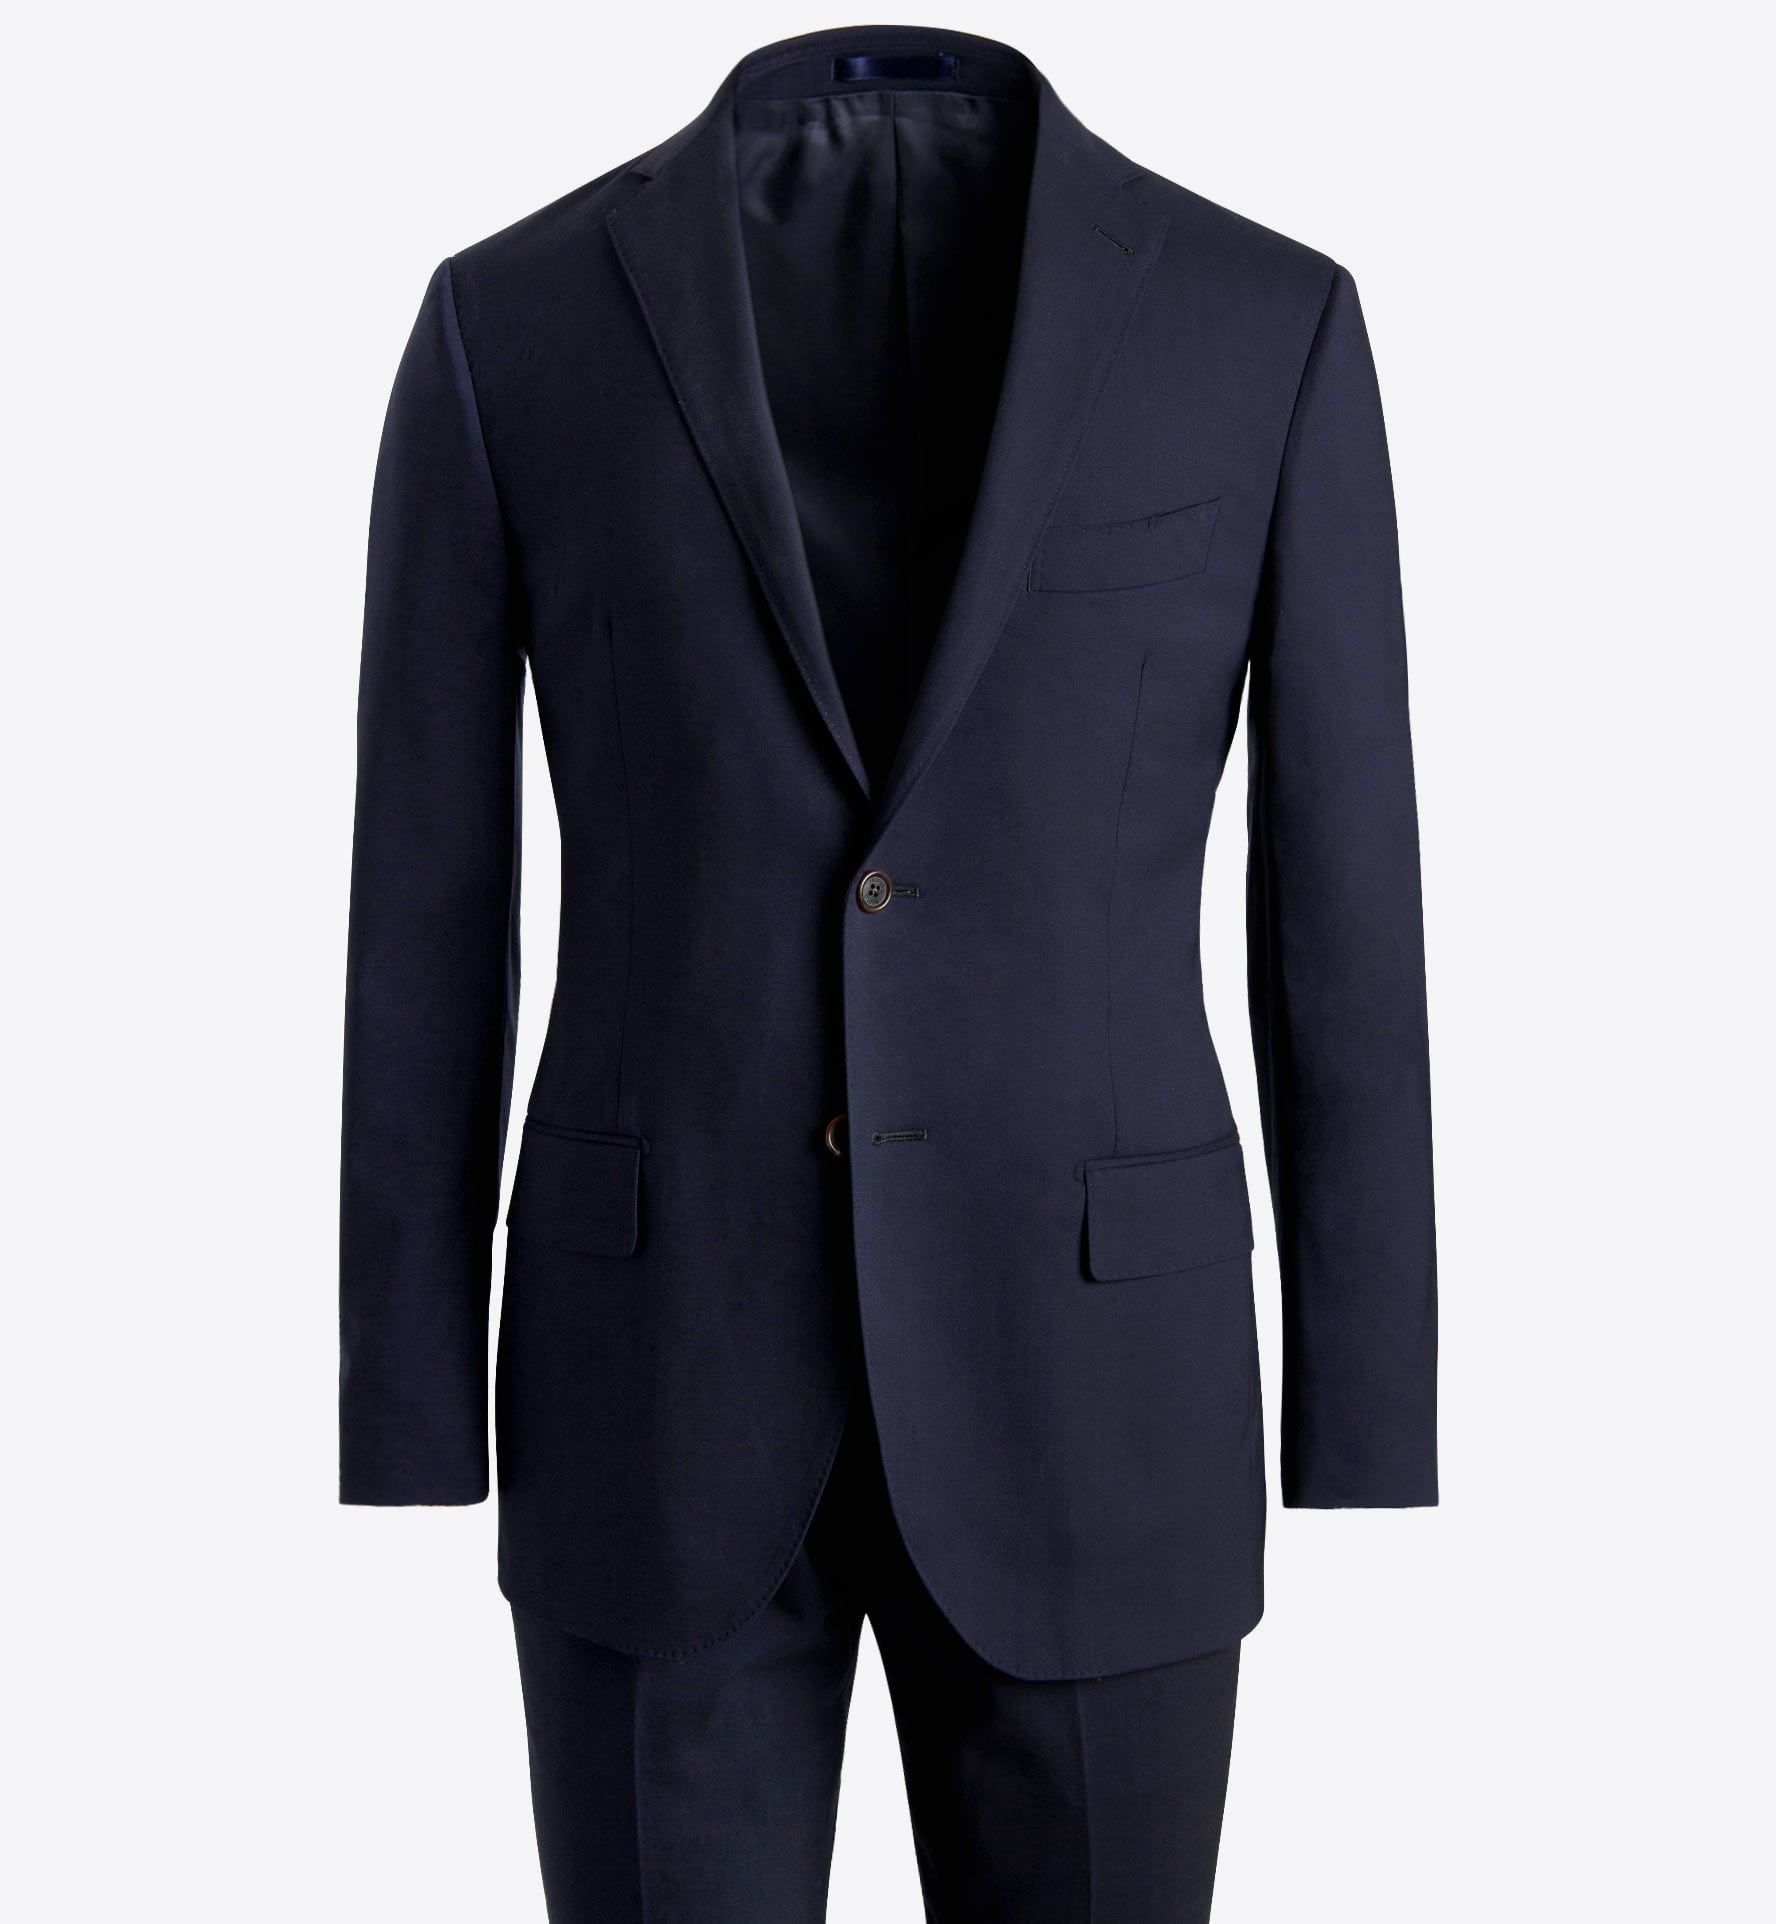 Zoom Image of Allen Navy Stretch Wool Plain Weave Suit